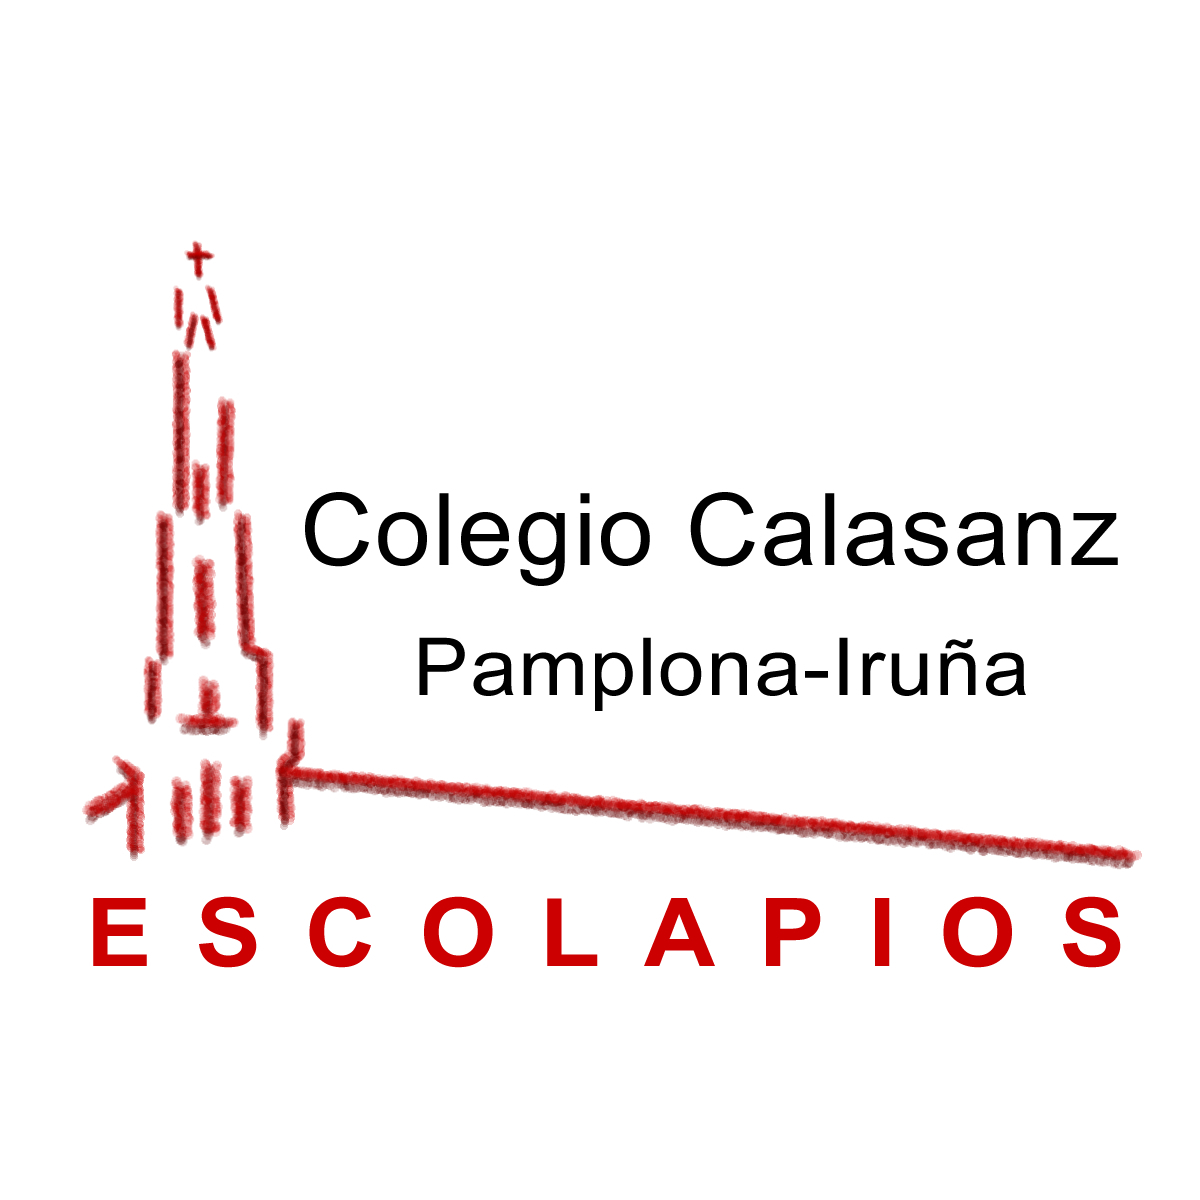 Colegio Calasanz - Escolapios Pamplona - Iruña